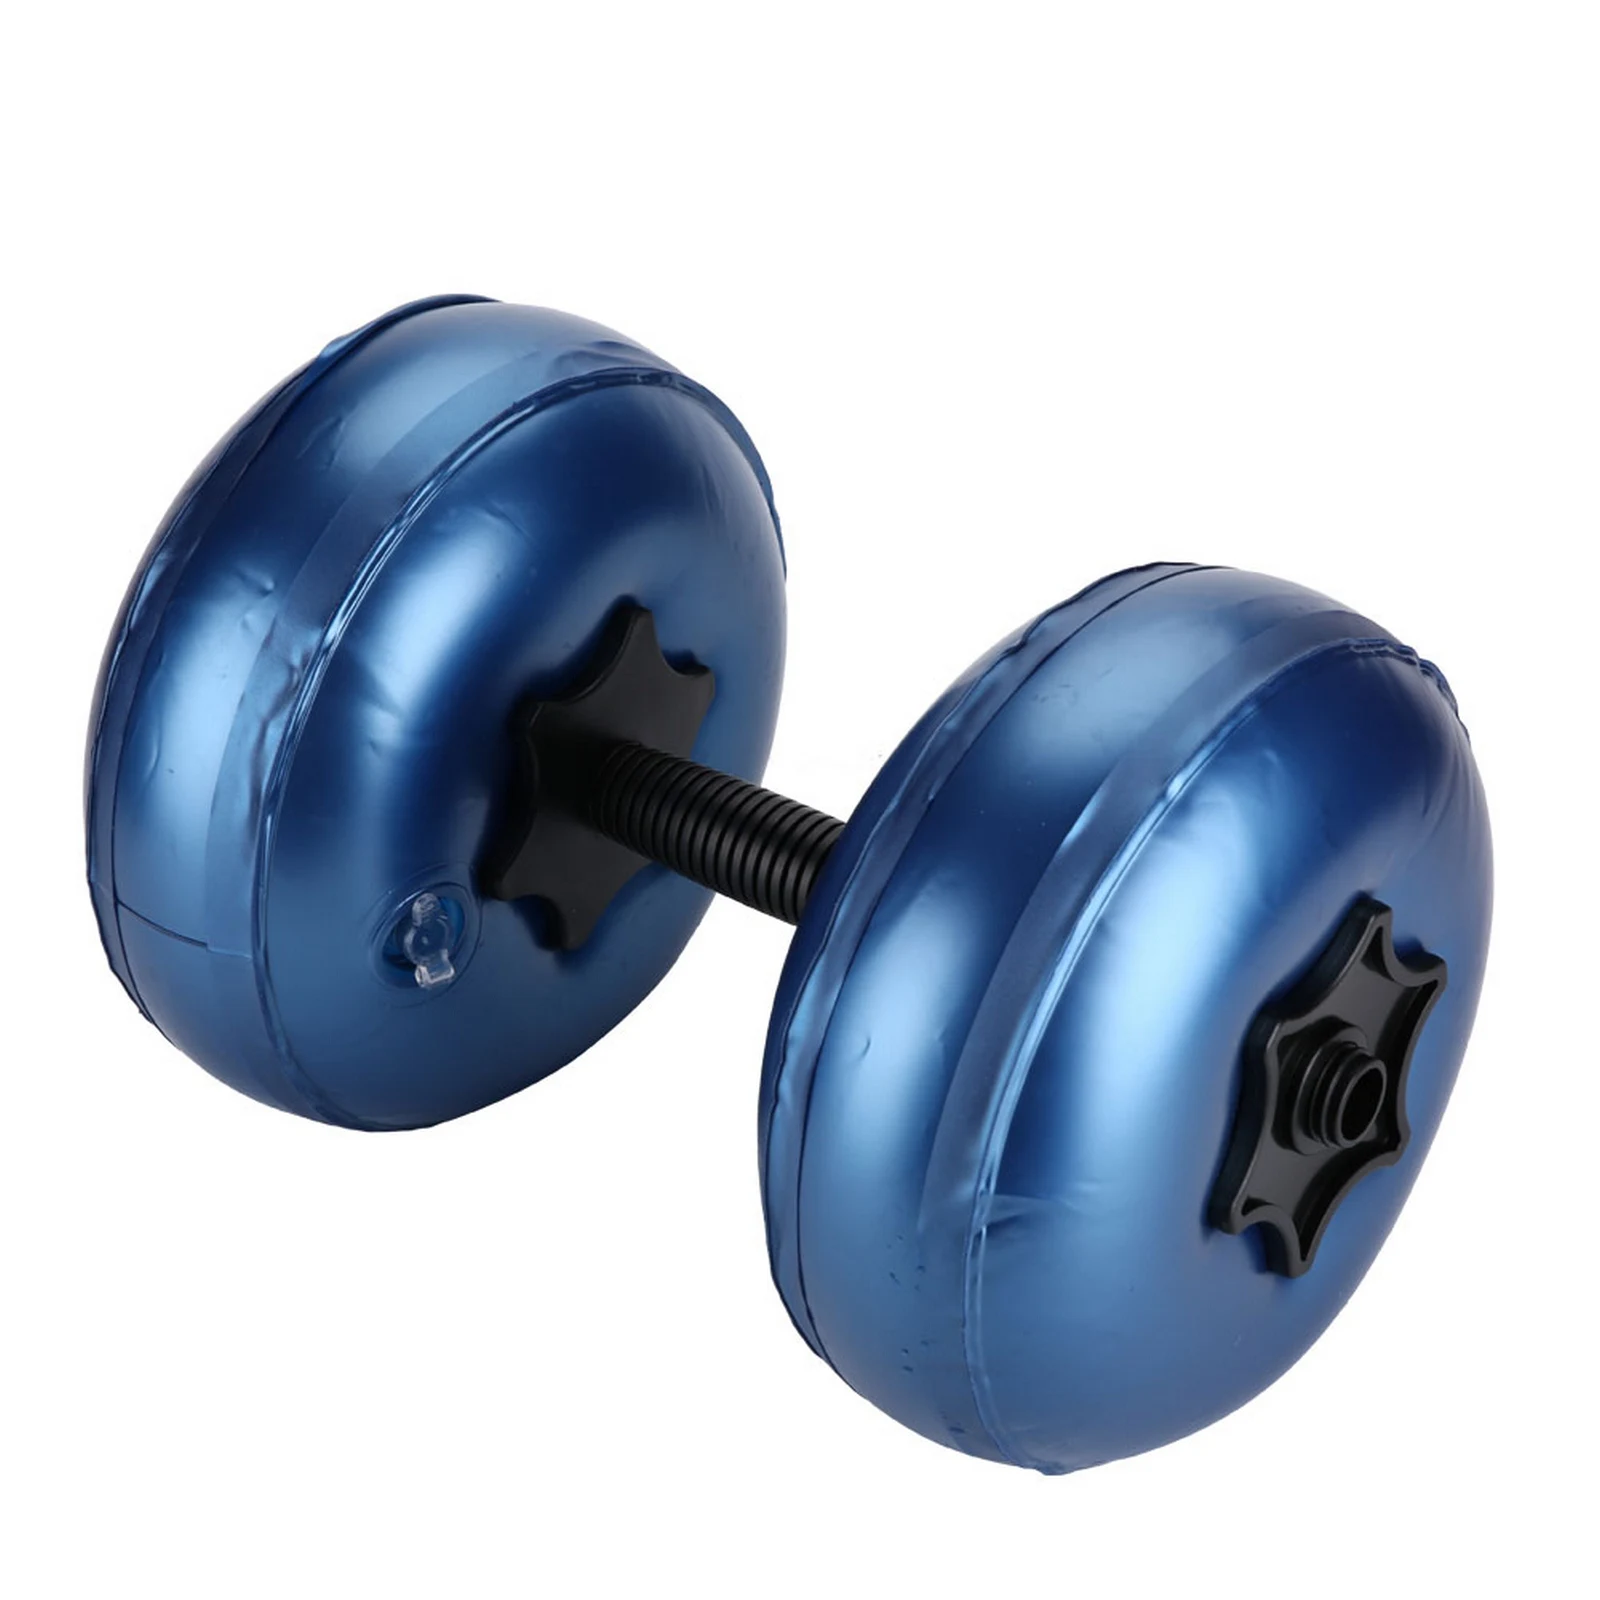 

Travel Water-filled Dumbbell Barbell Set For Men Women Portable Adjustable Weight 1-10 KG Gym Dumbbells Training Home Fitness